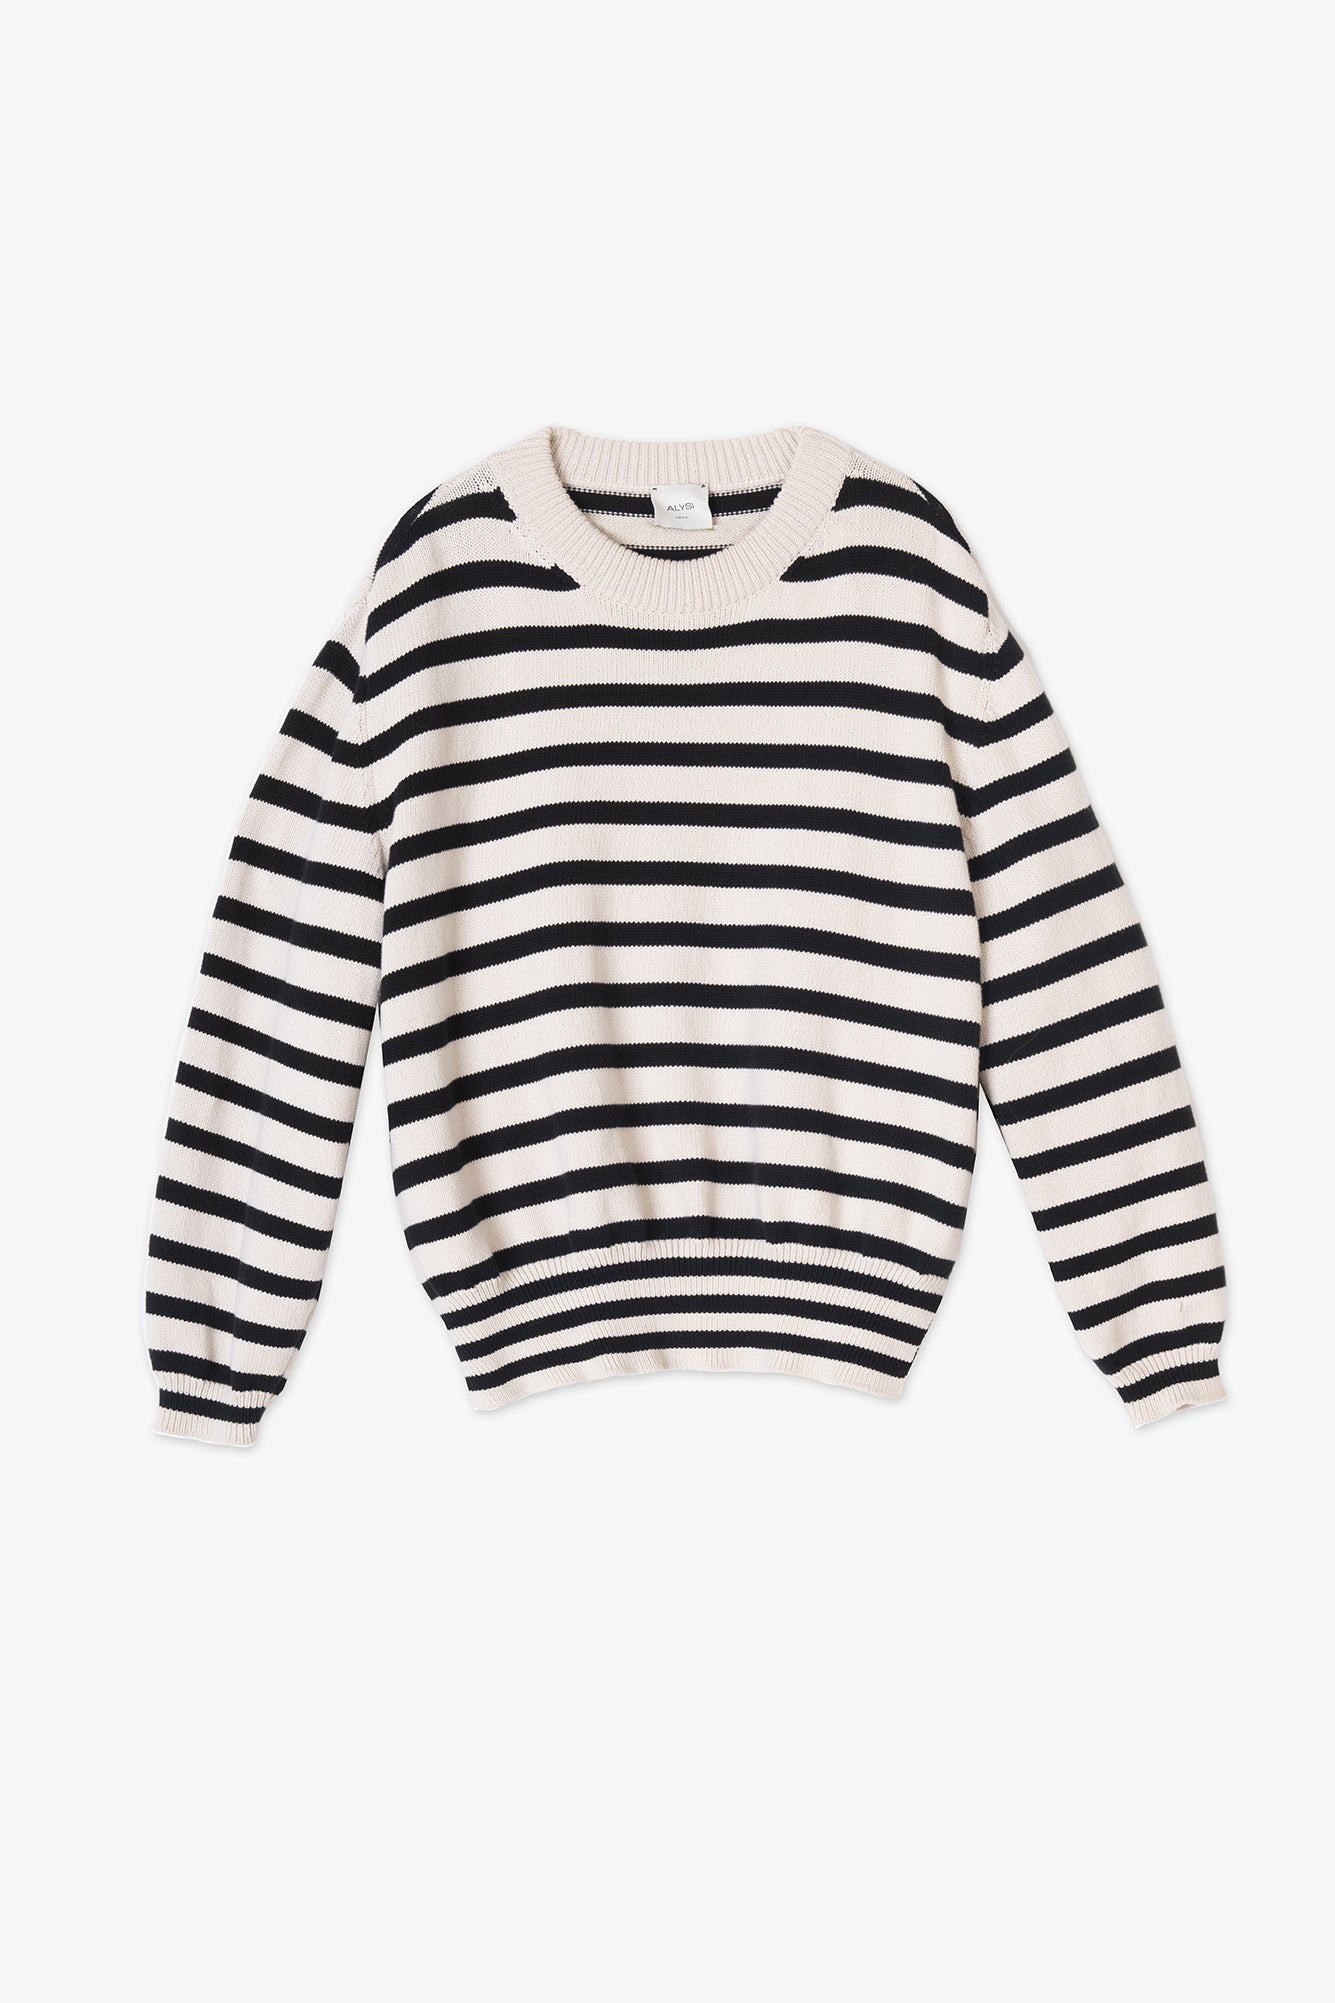 Alysi Spring Stripes Sweater 204419